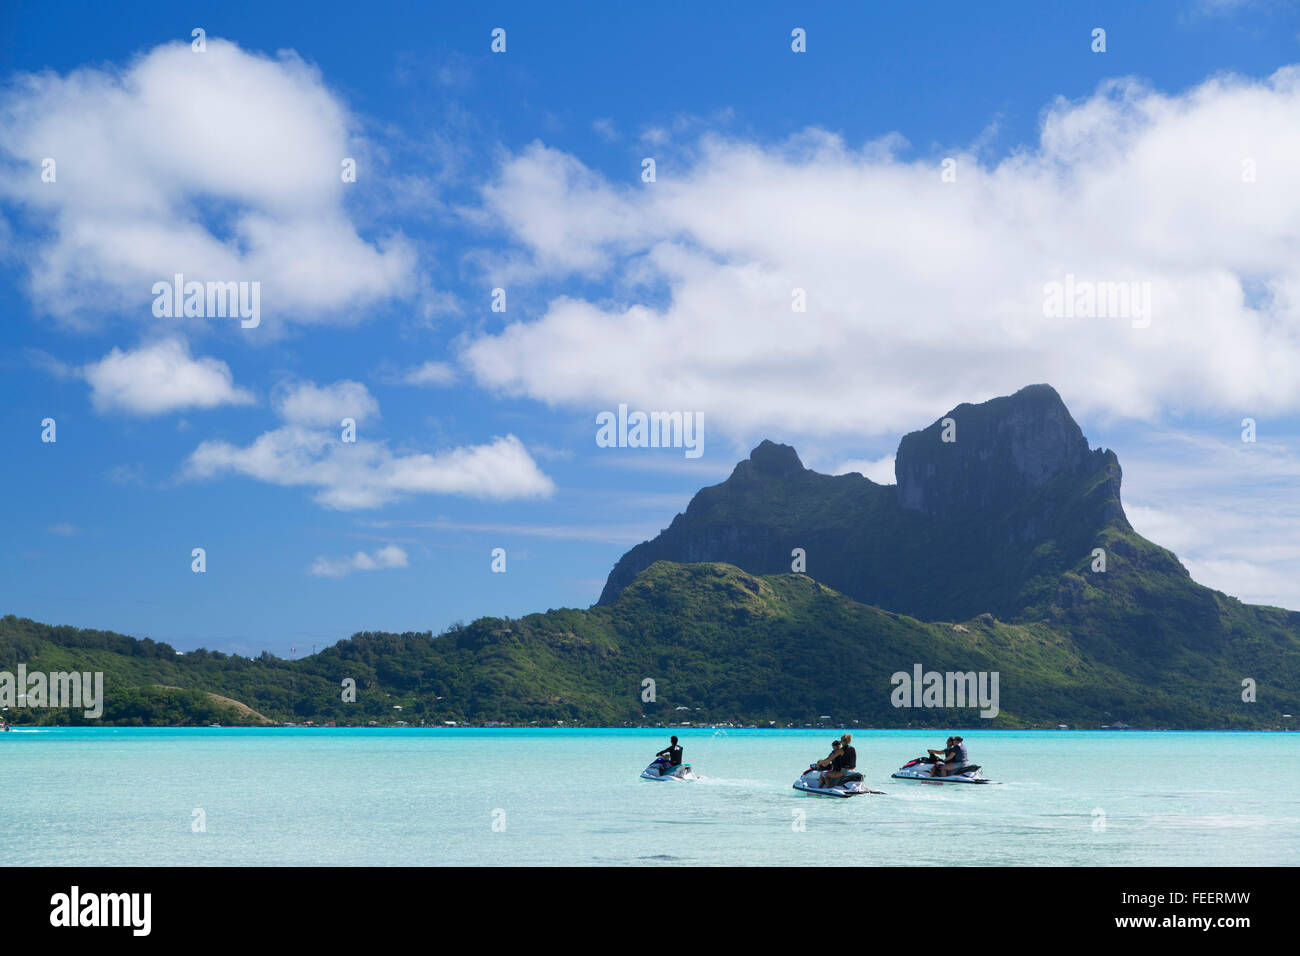 People on jetskis, Bora Bora, Society Islands, French Polynesia Stock Photo